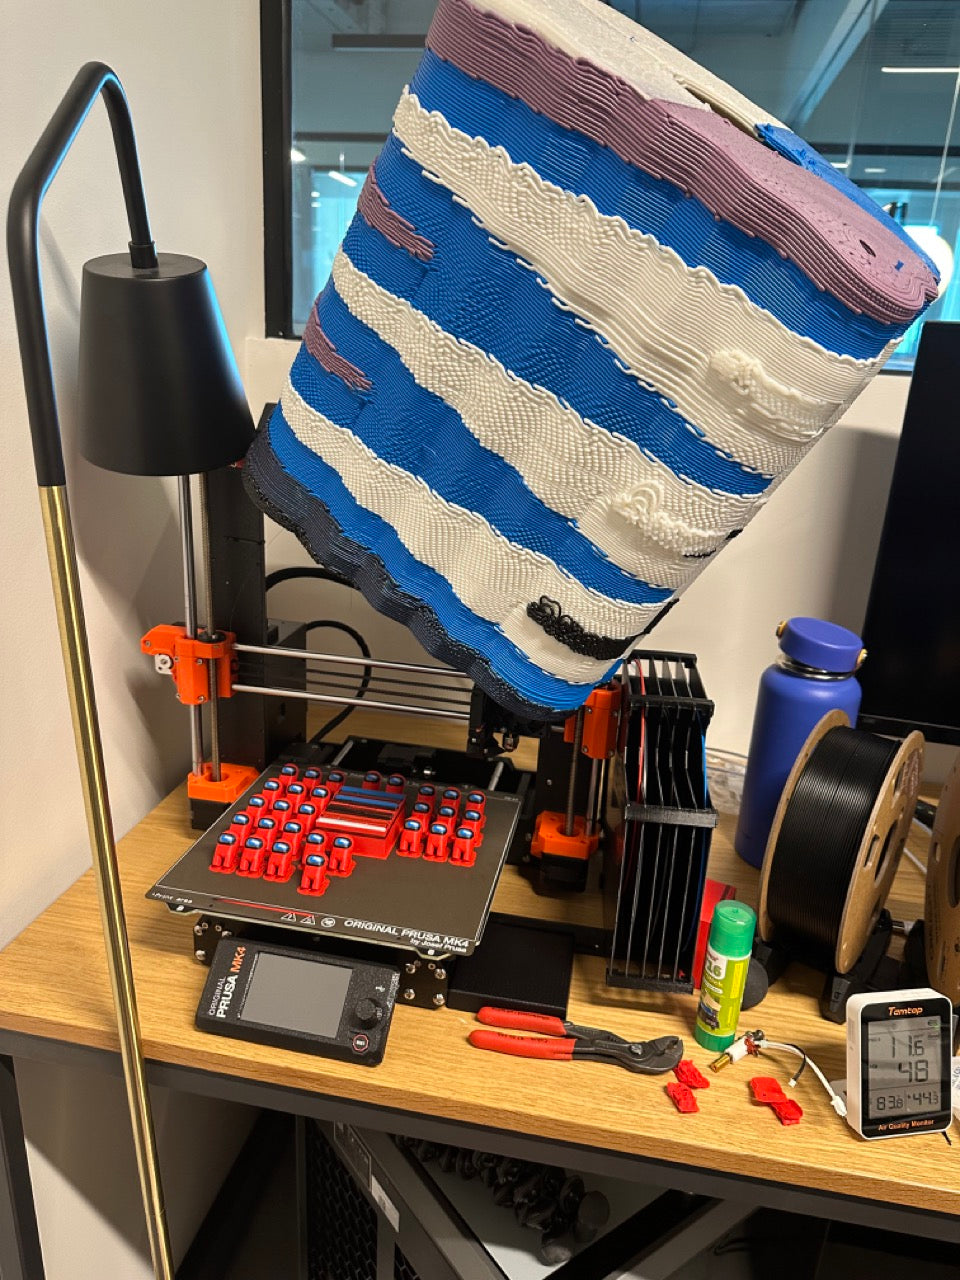 3D Printed Trash Bin